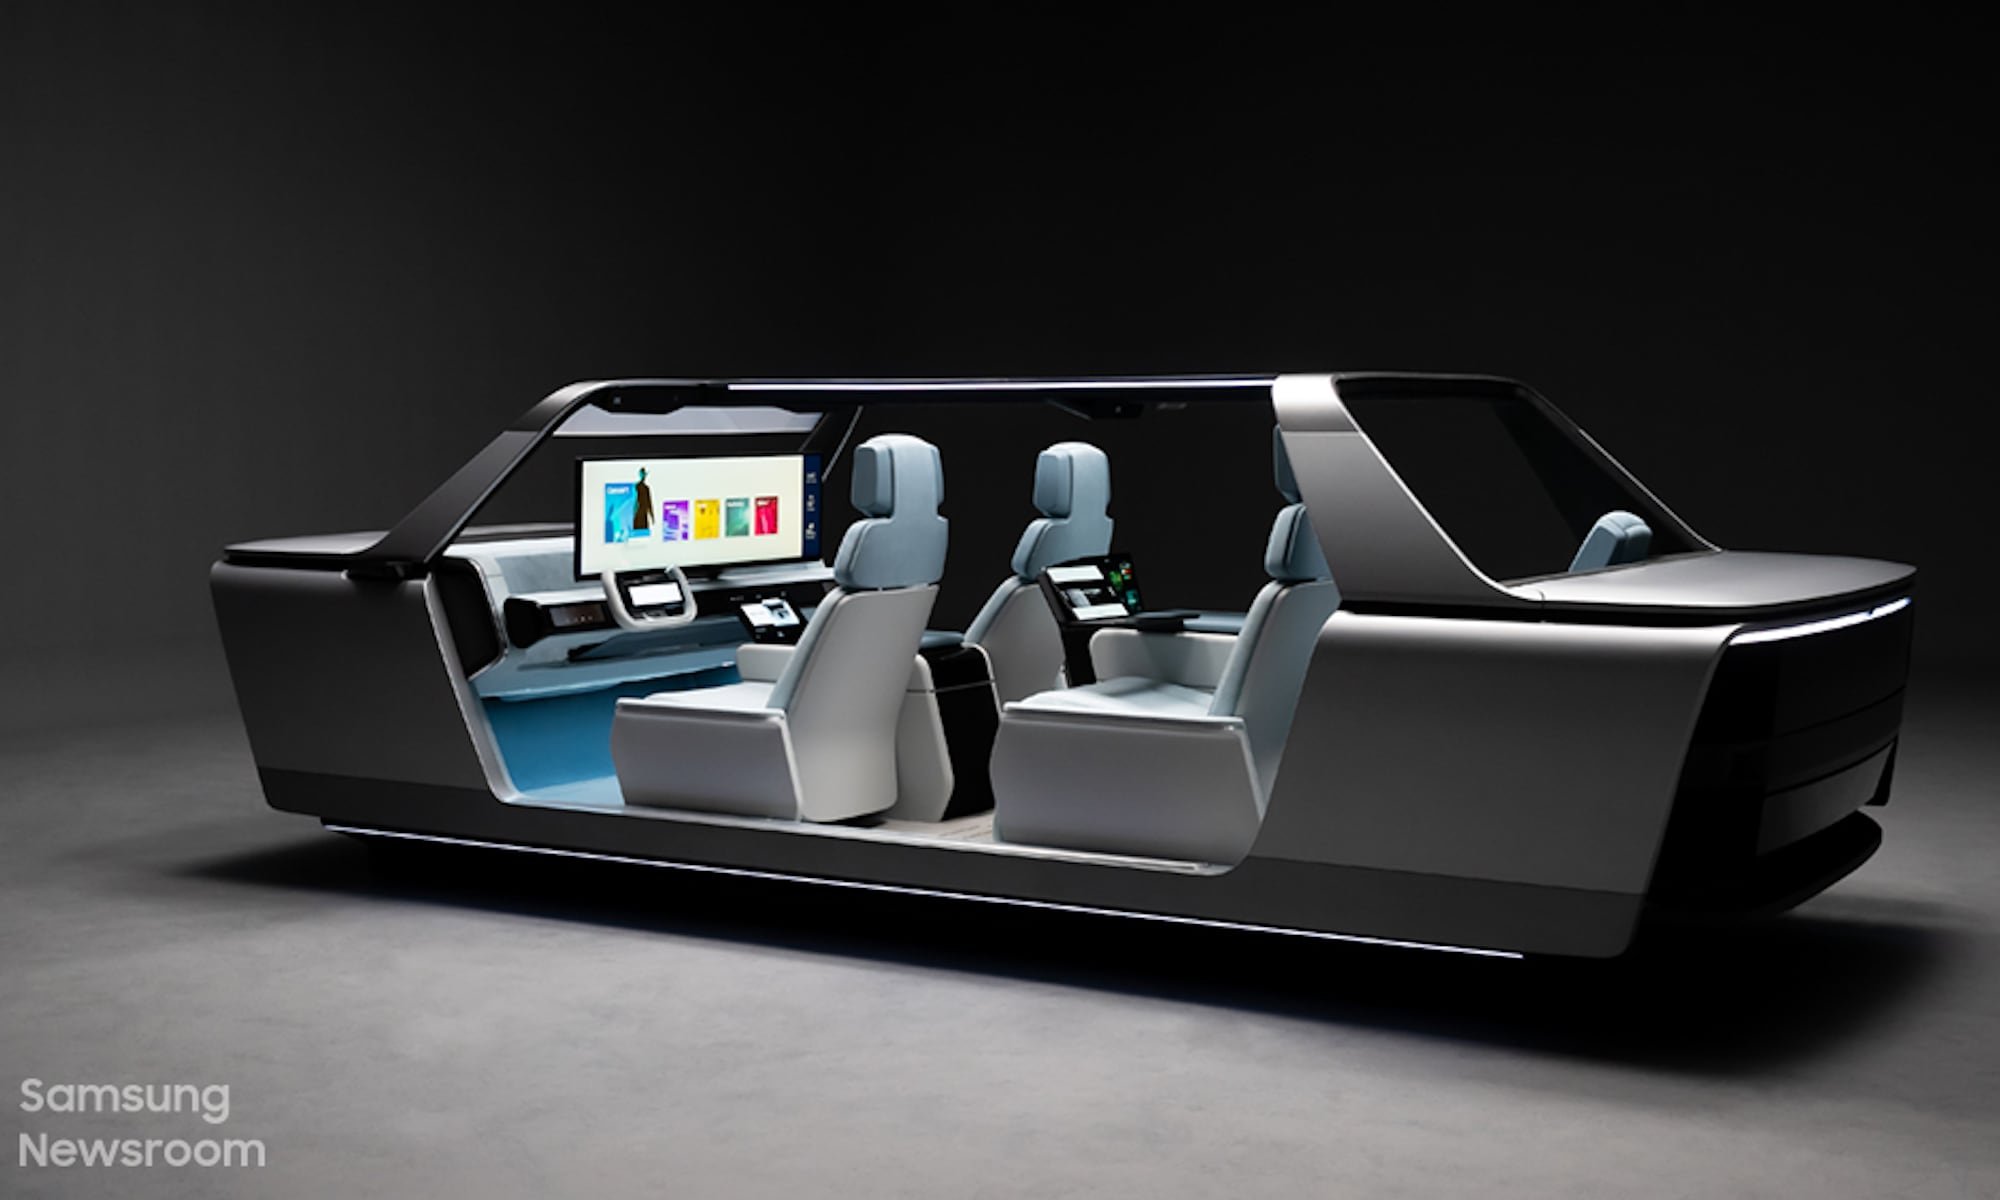 Samsung’s Digital Cockpit transforms your vehicle into an entertainment hub